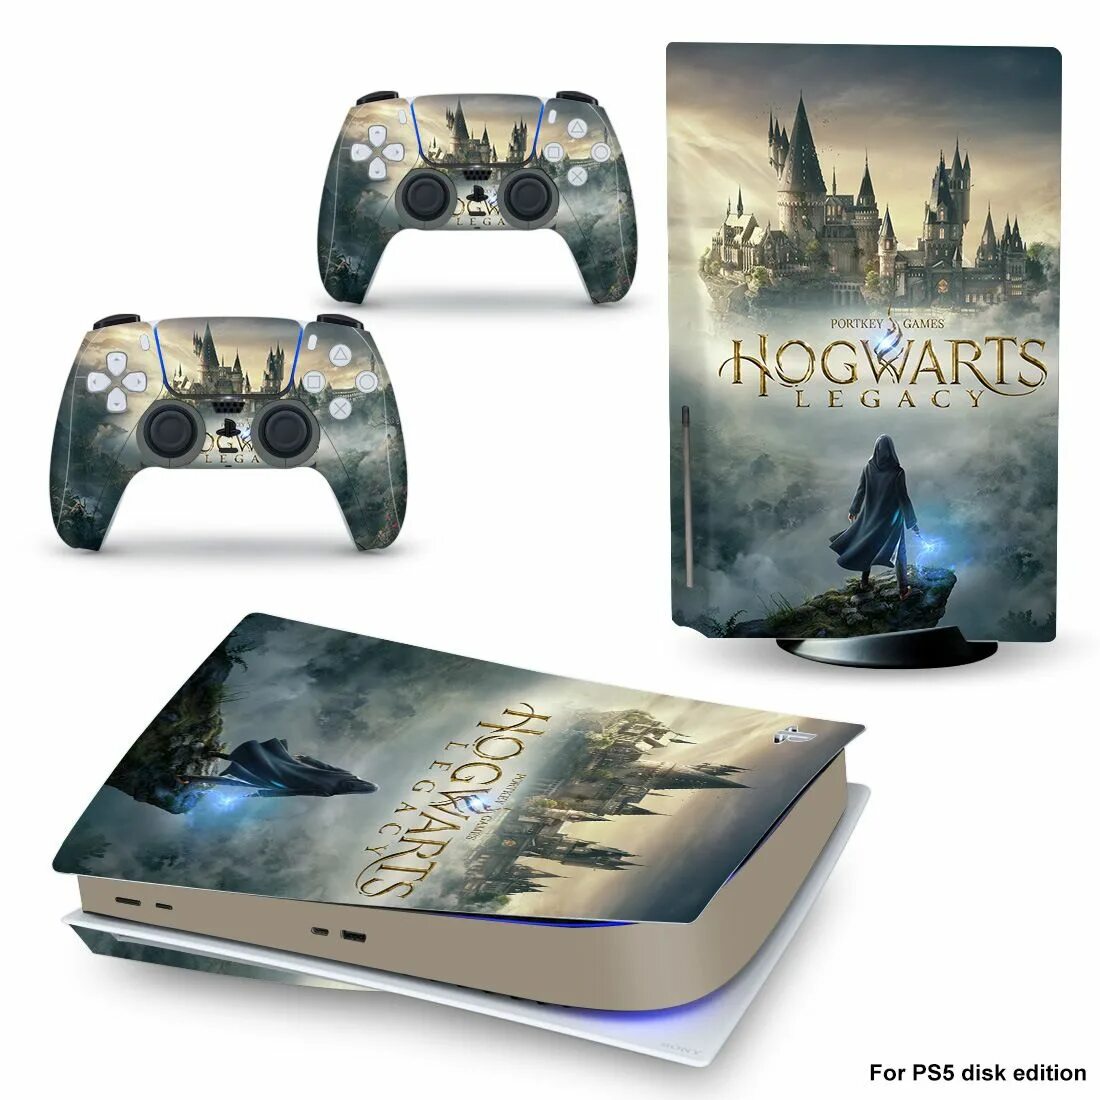 Hogwarts Legacy ps4 диск. Hogwarts Legacy ps5 диск. Hogwarts: Legacy - коллекционное издание (ps5). Hogwarts Legacy Deluxe ps5 диск. Хогвартс легаси пс 5